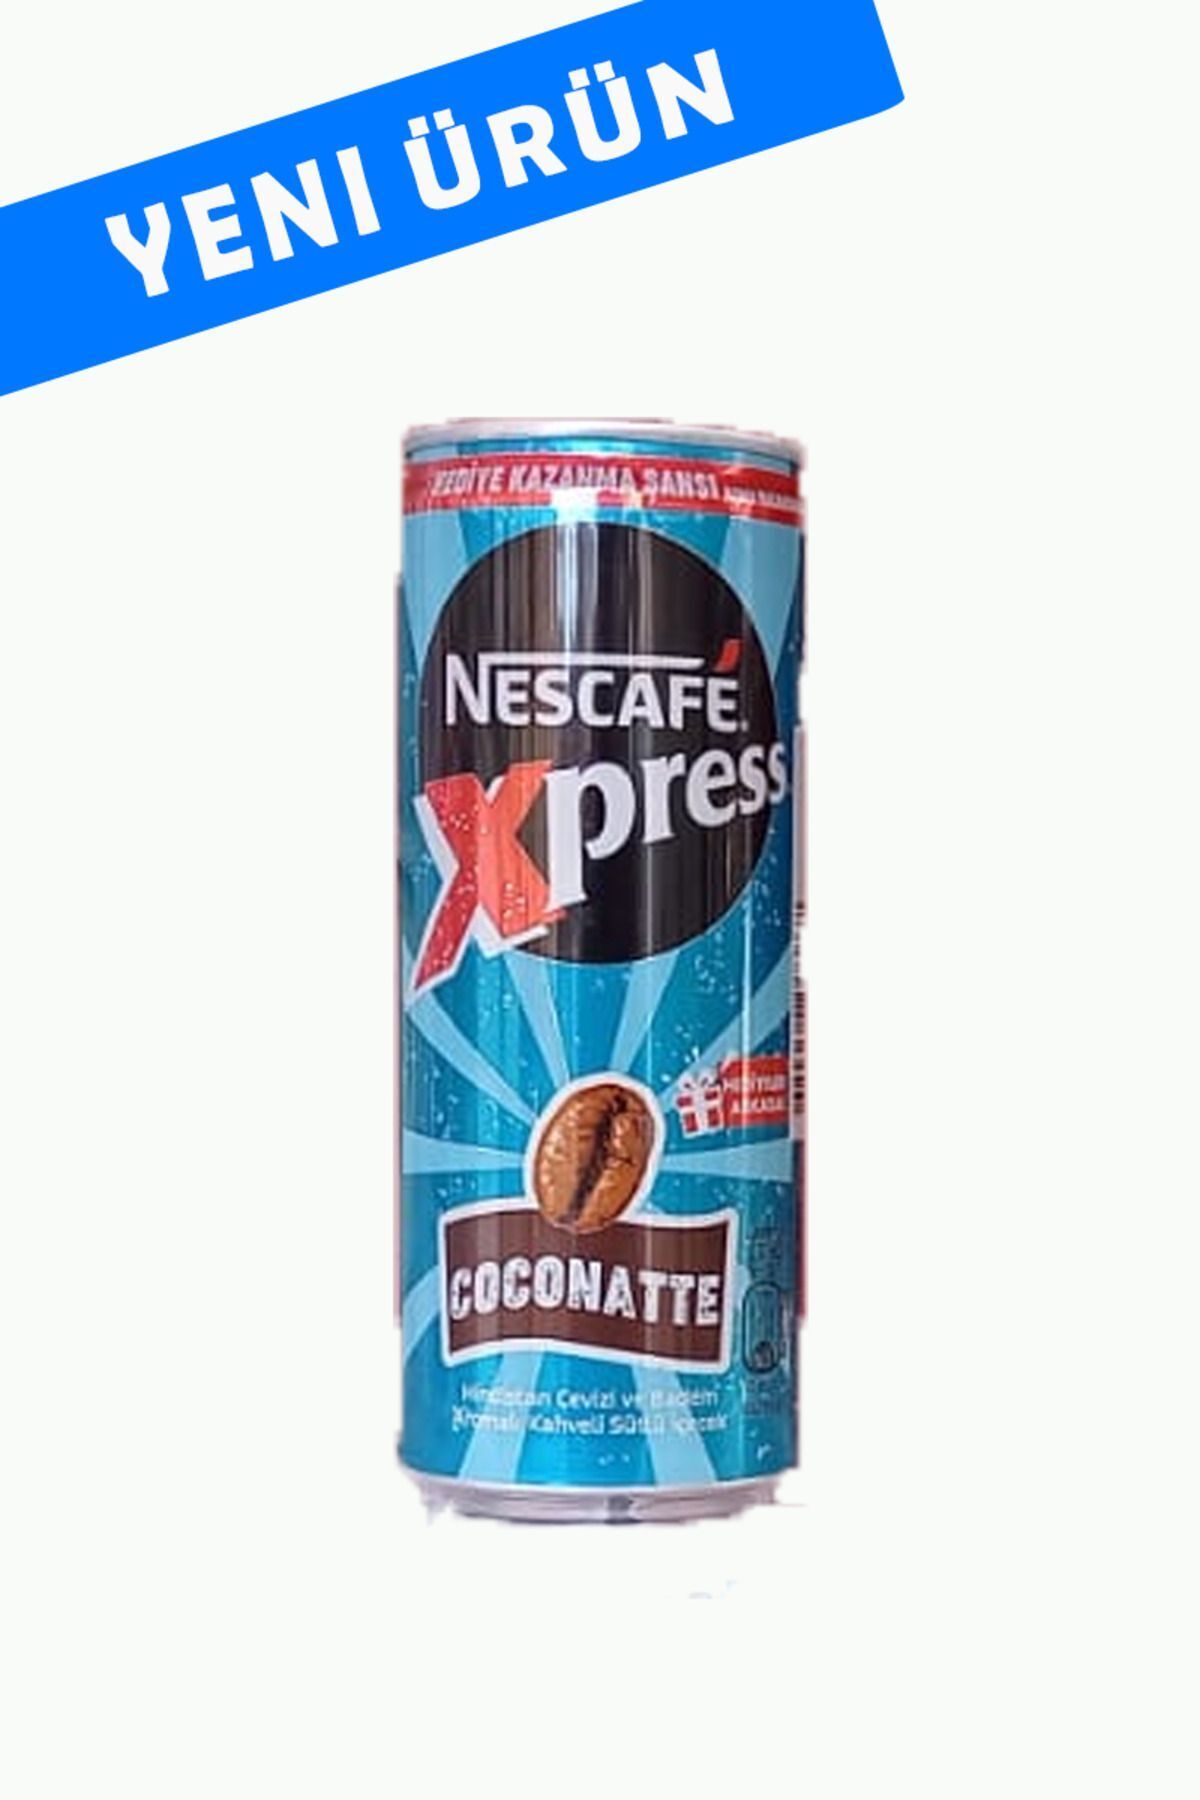 Nescafe Xpress Coconatte 24 Adet X 250 Ml (Hindistan Cevizi ve Badem Aromalı)